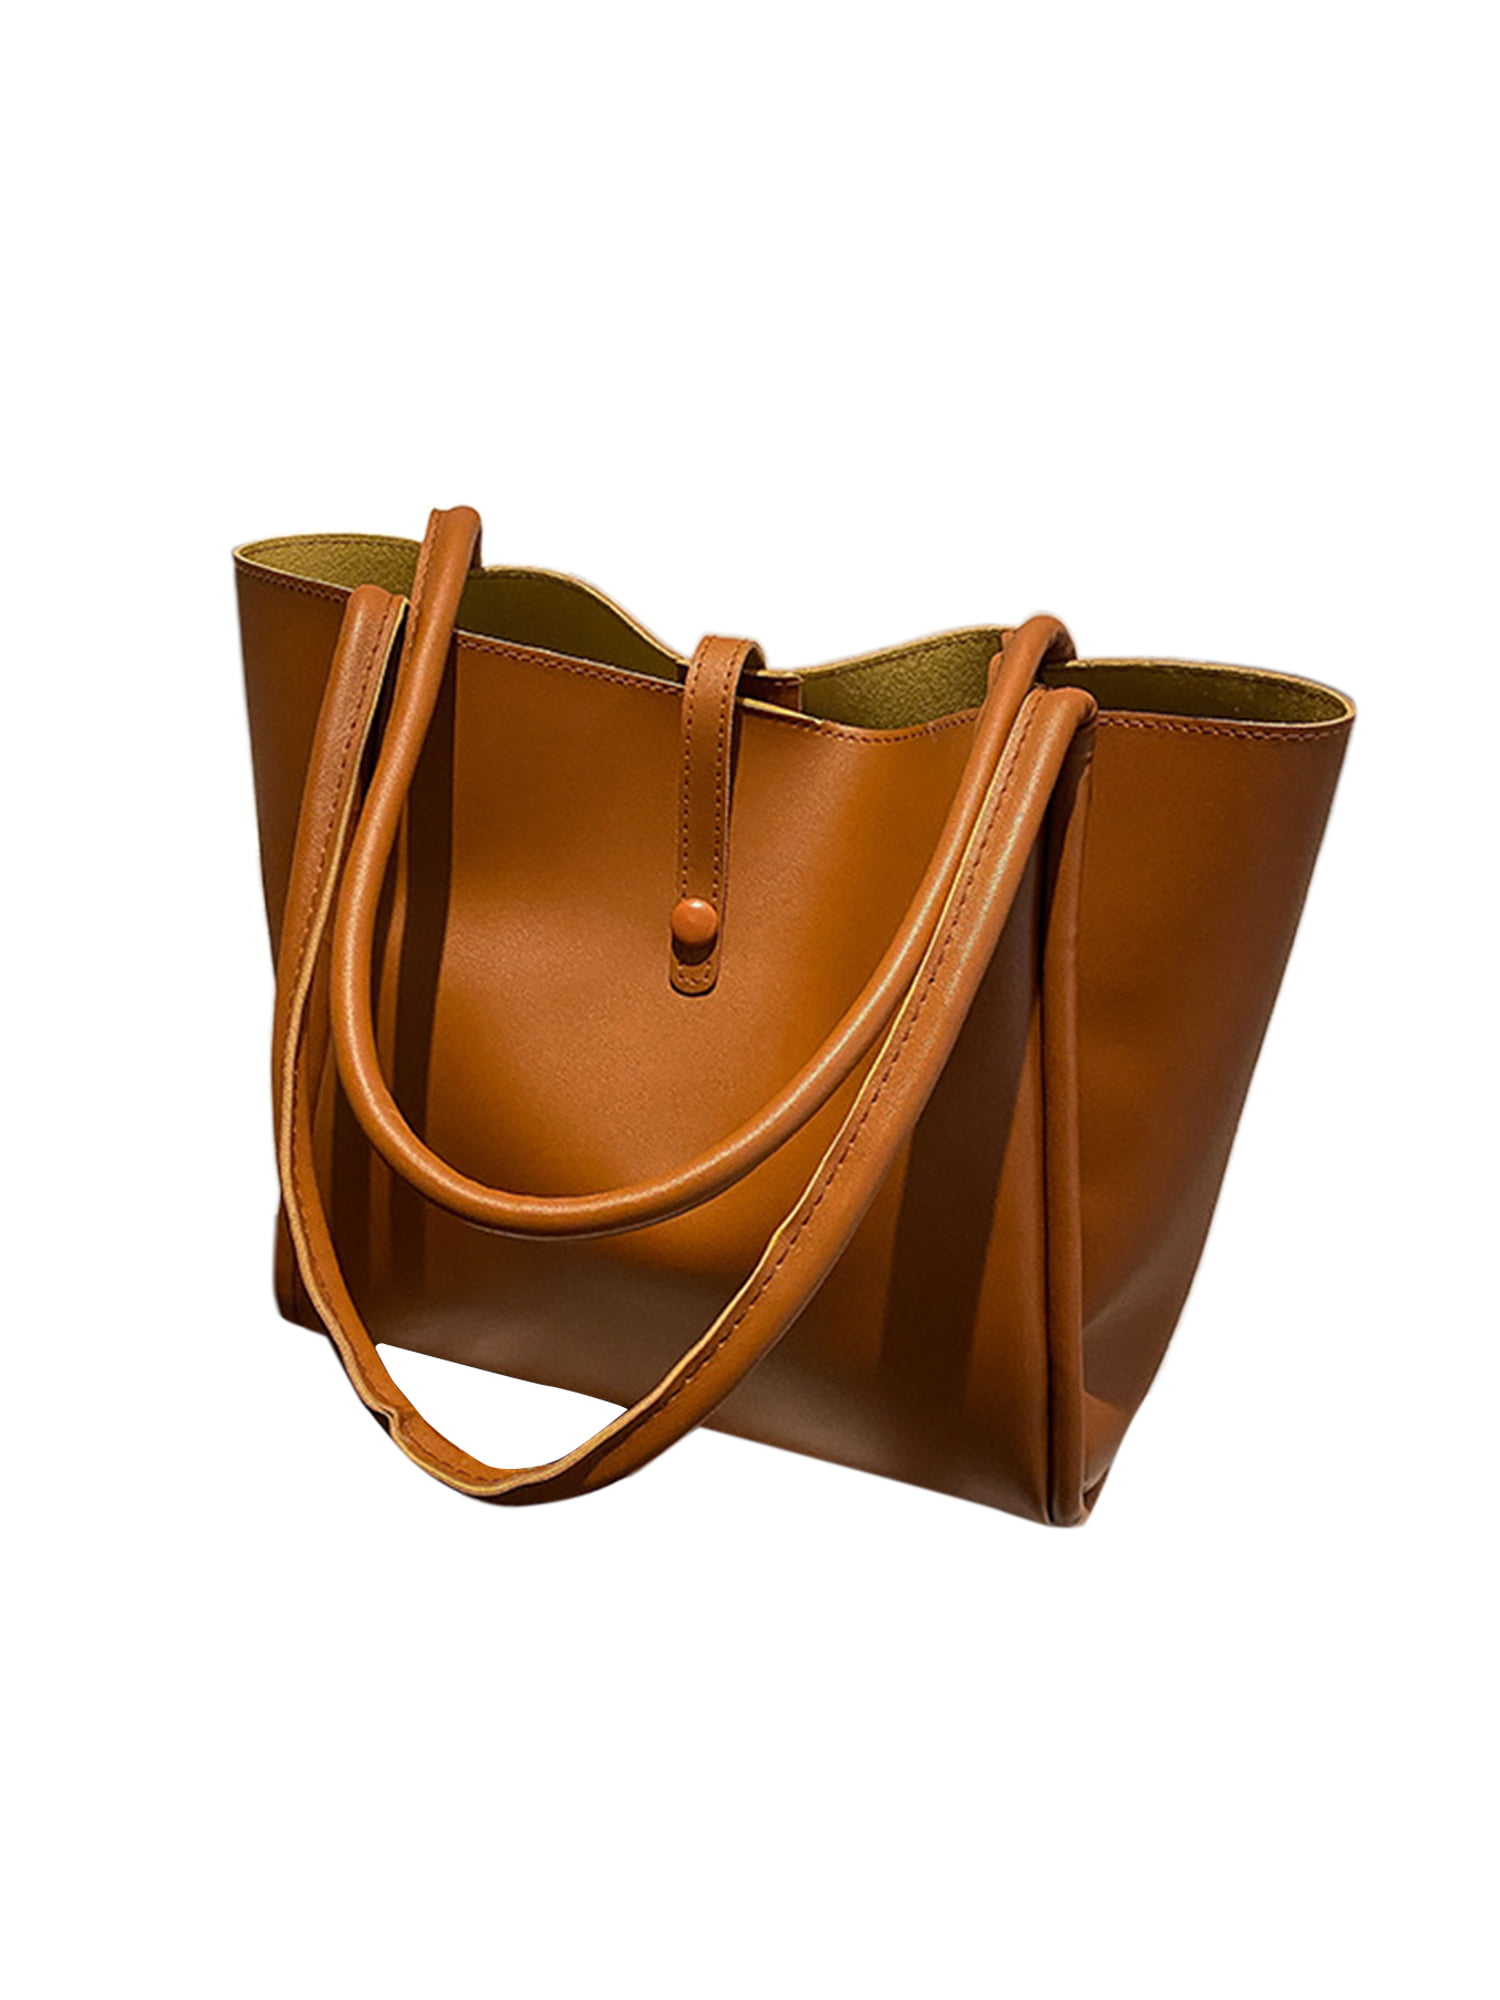 gold) Women Fashion Shoulder Bag Tote Large Handbag Office Ladies